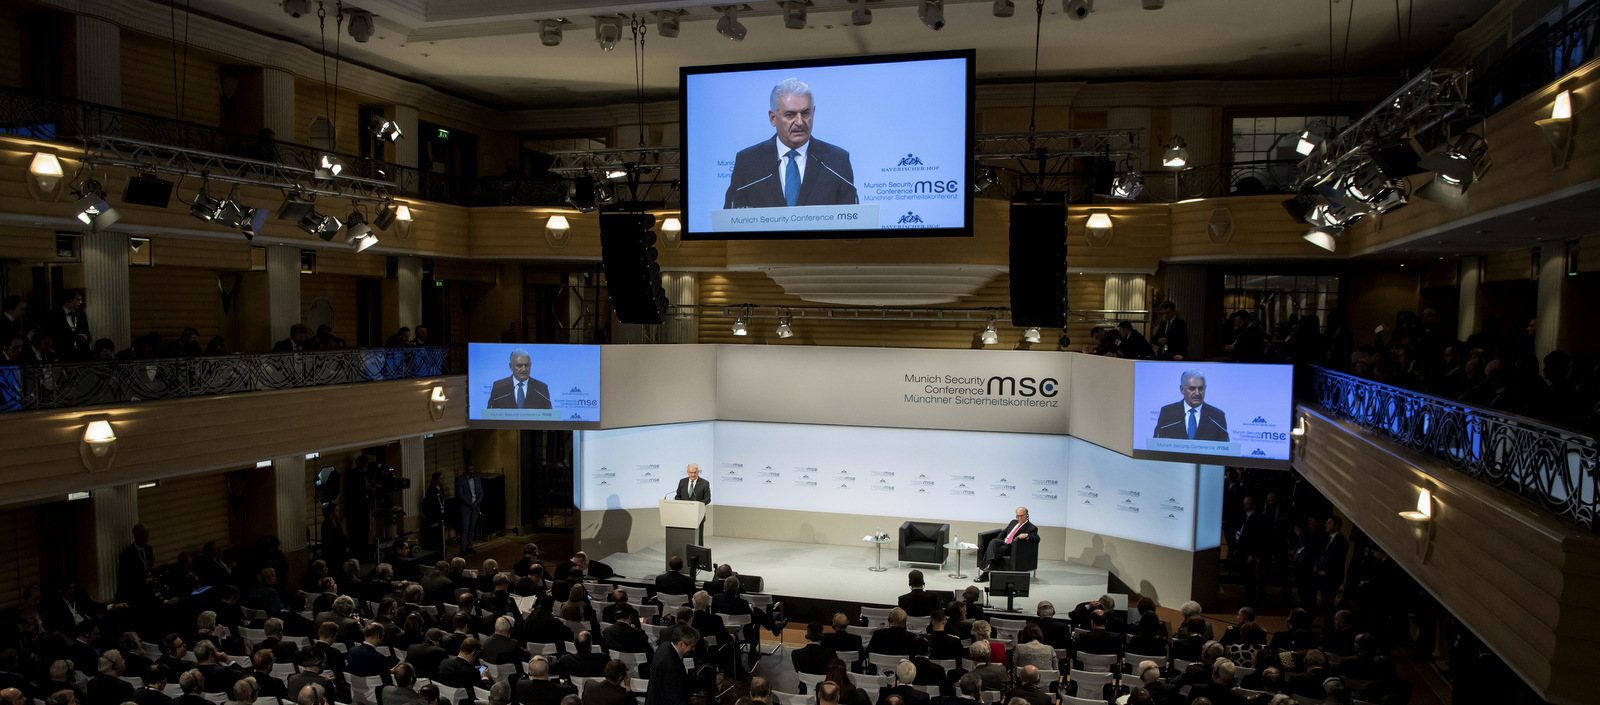 Turkey's Prime Minister Binali Yildirim, speaks at the Security Conference in Munich, Germany, Feb. 17, 2018. (Sven Hoppe/dpa via AP)